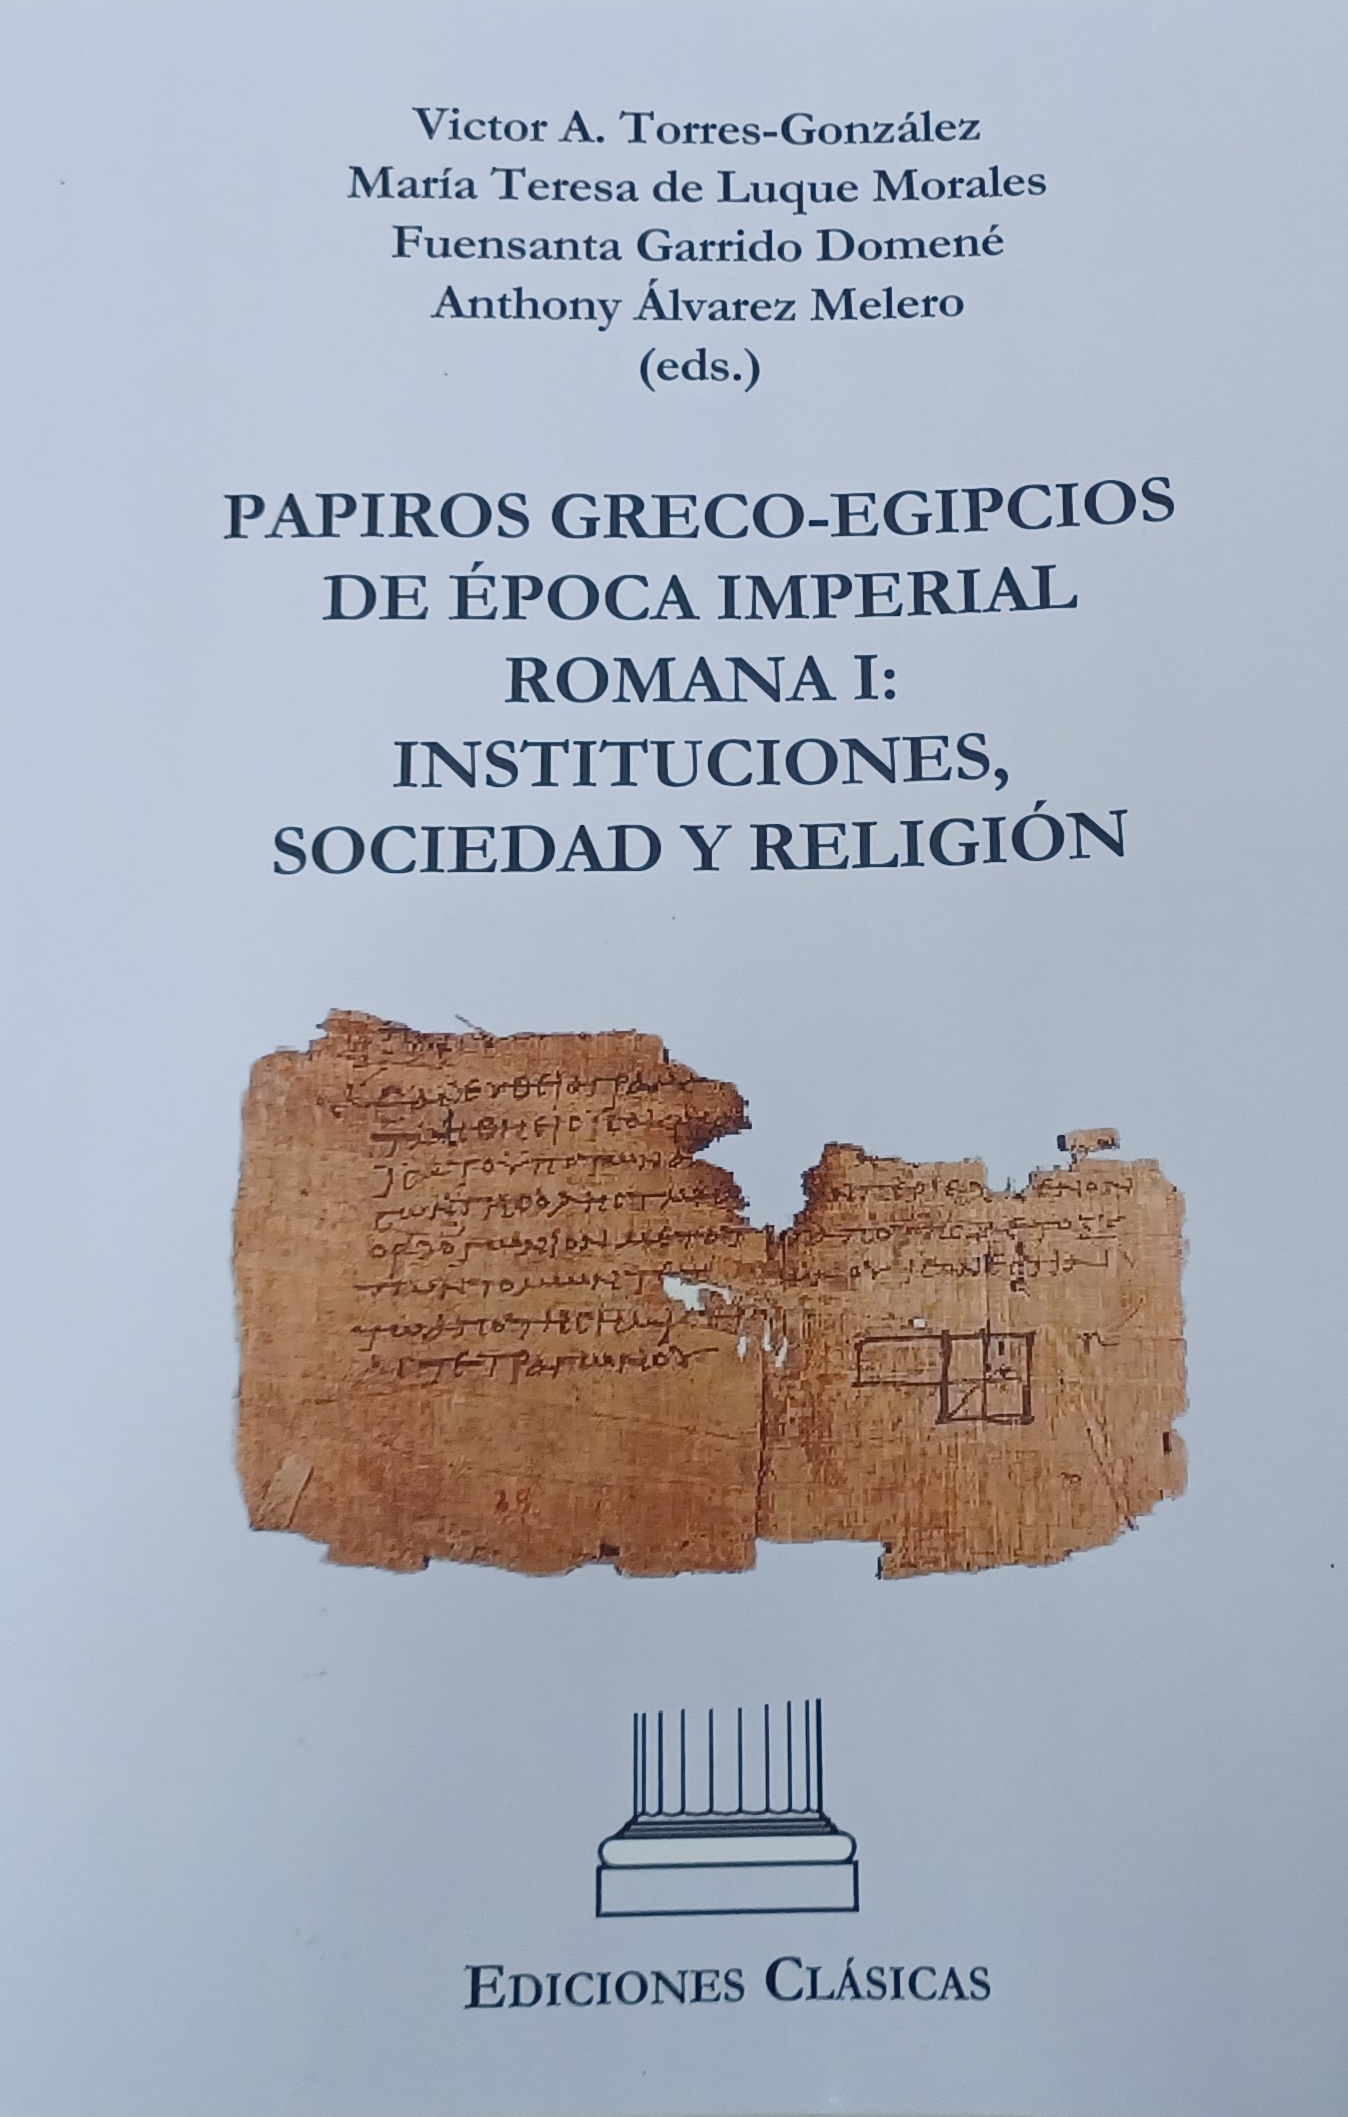 Imagen de portada del libro Papiros greco-egipcios de época imperial romana I